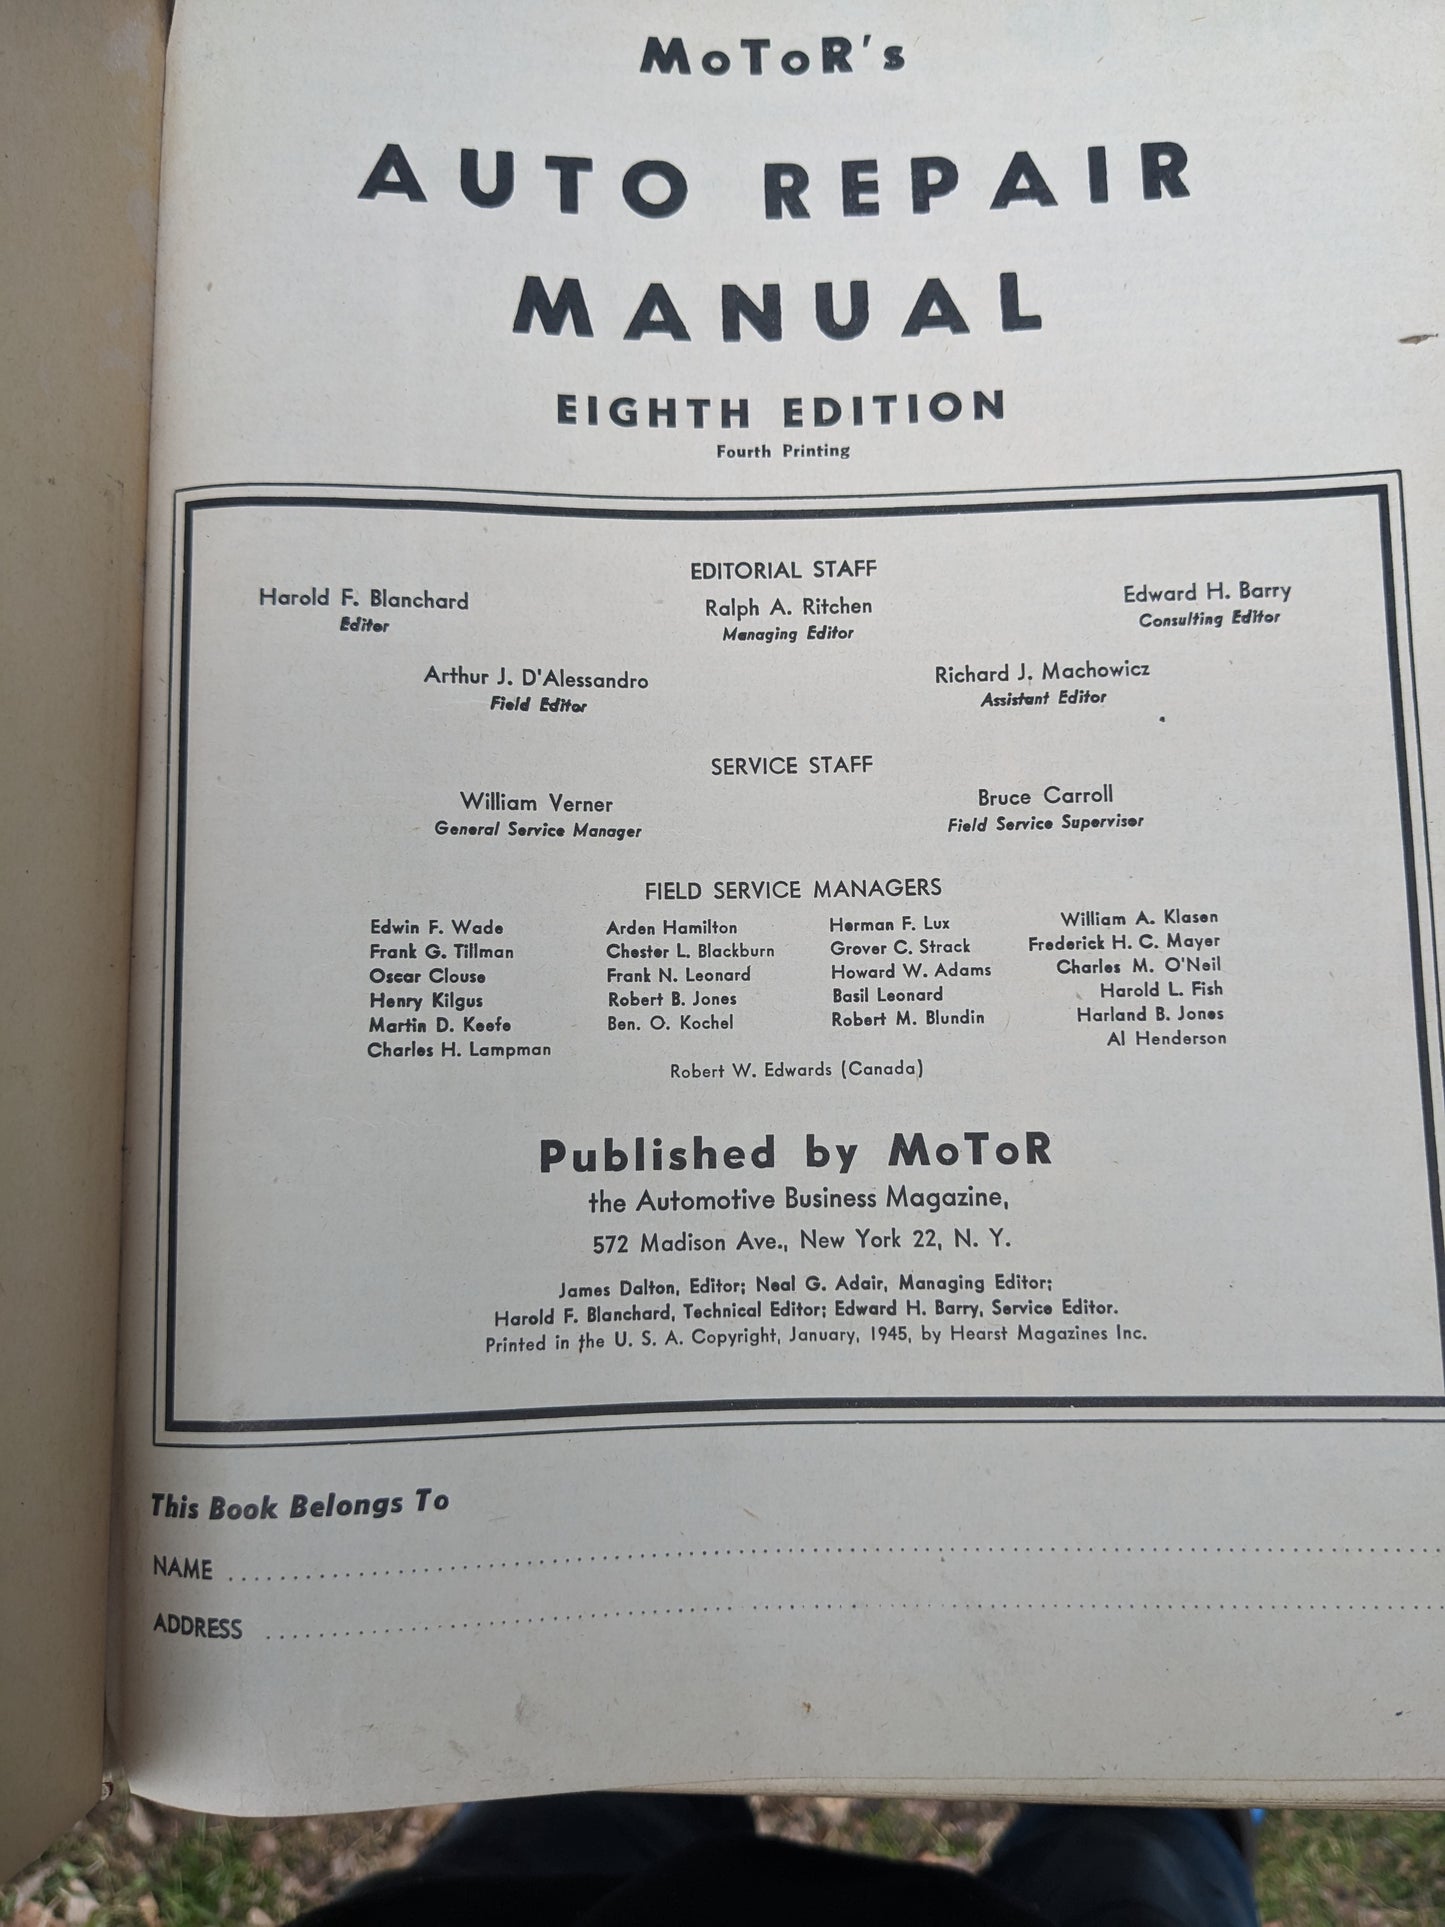 Motor's Auto Repair Manual, Eighth Edition, 1944